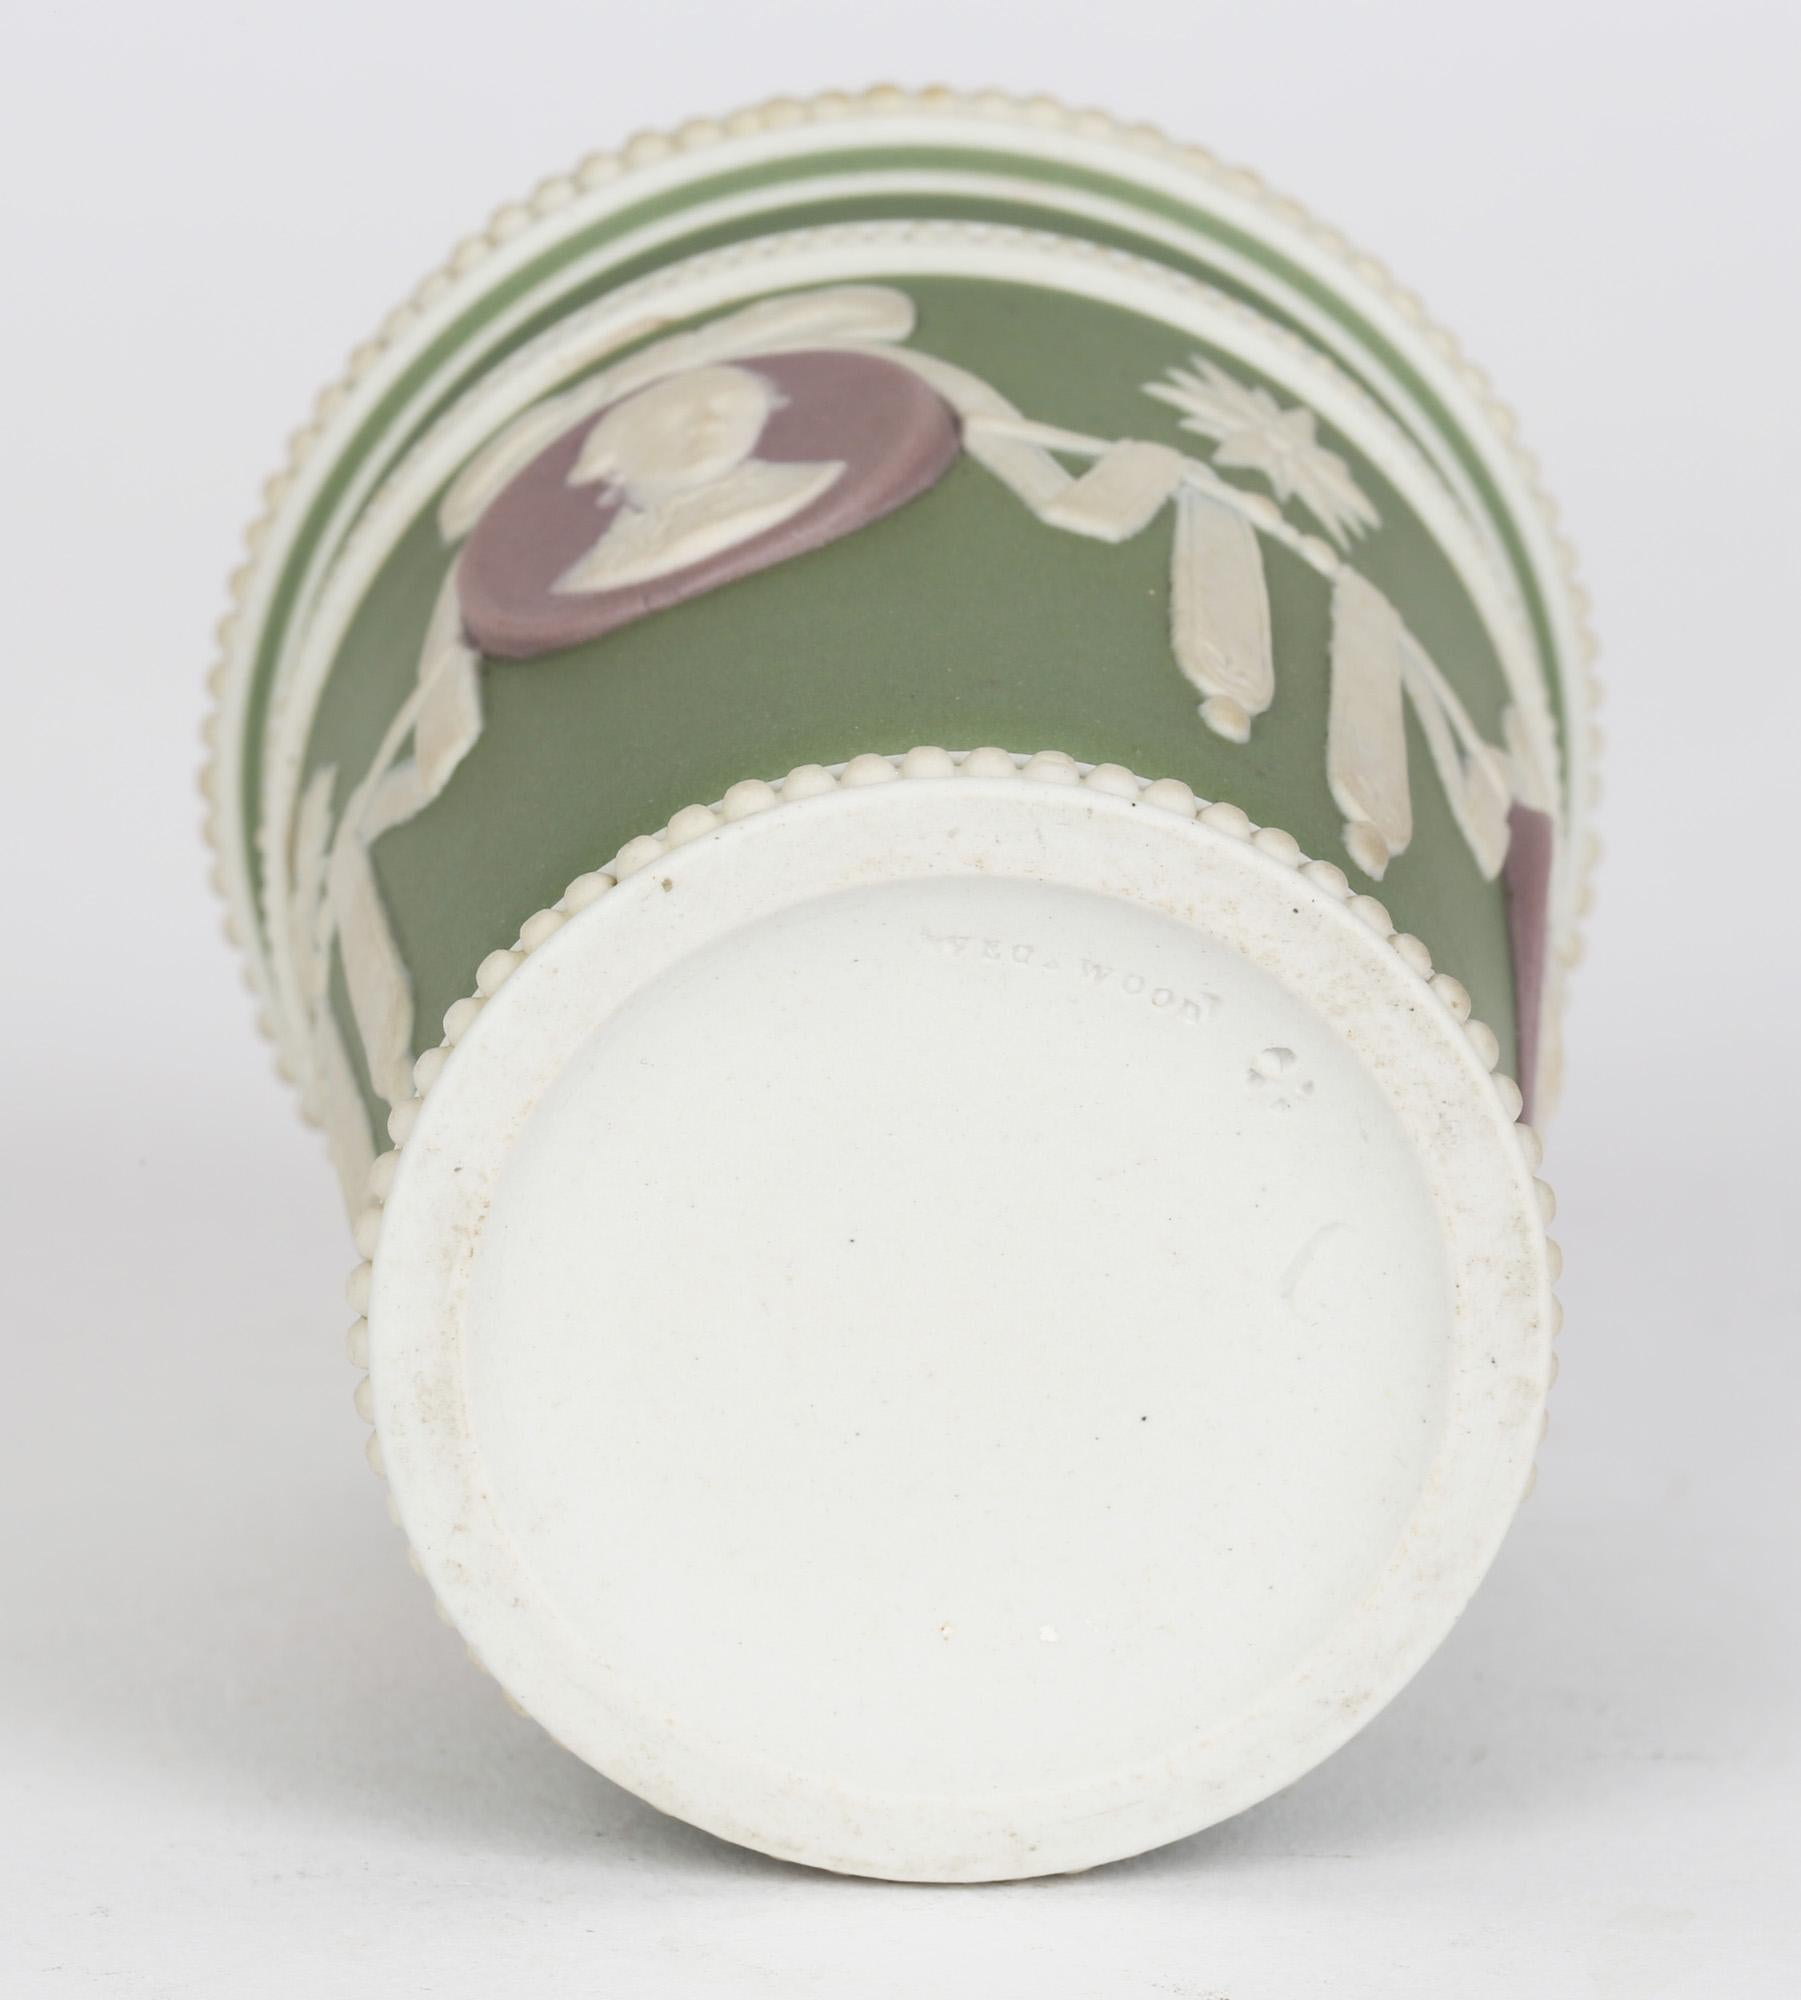 Porcelain Wedgwood Antique Three Color Jasperware Medallion Vase For Sale